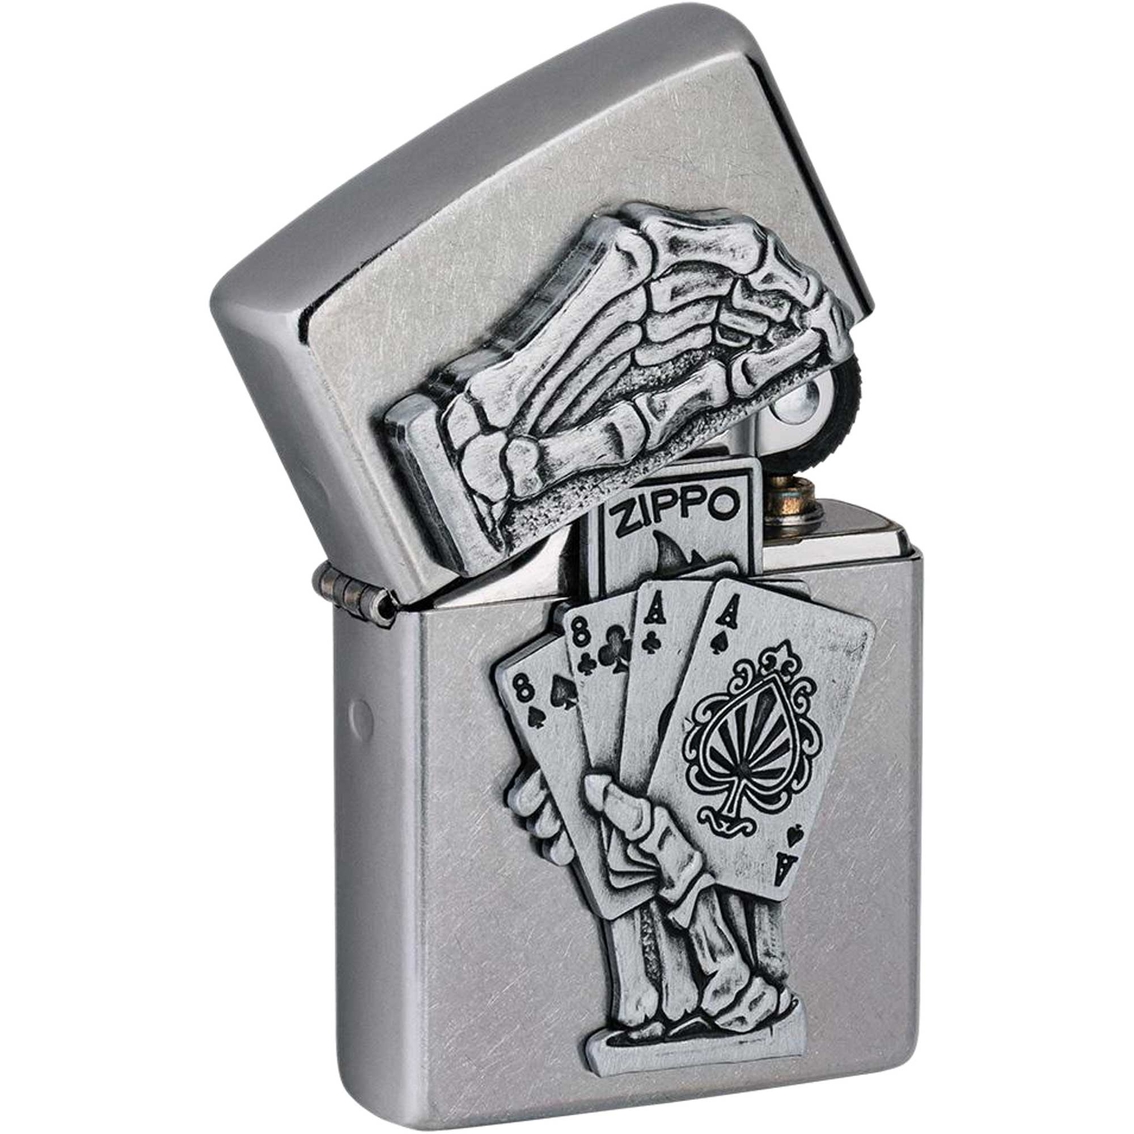 Zippo Dead Man's Hand Emblem Lighter - Image 2 of 2